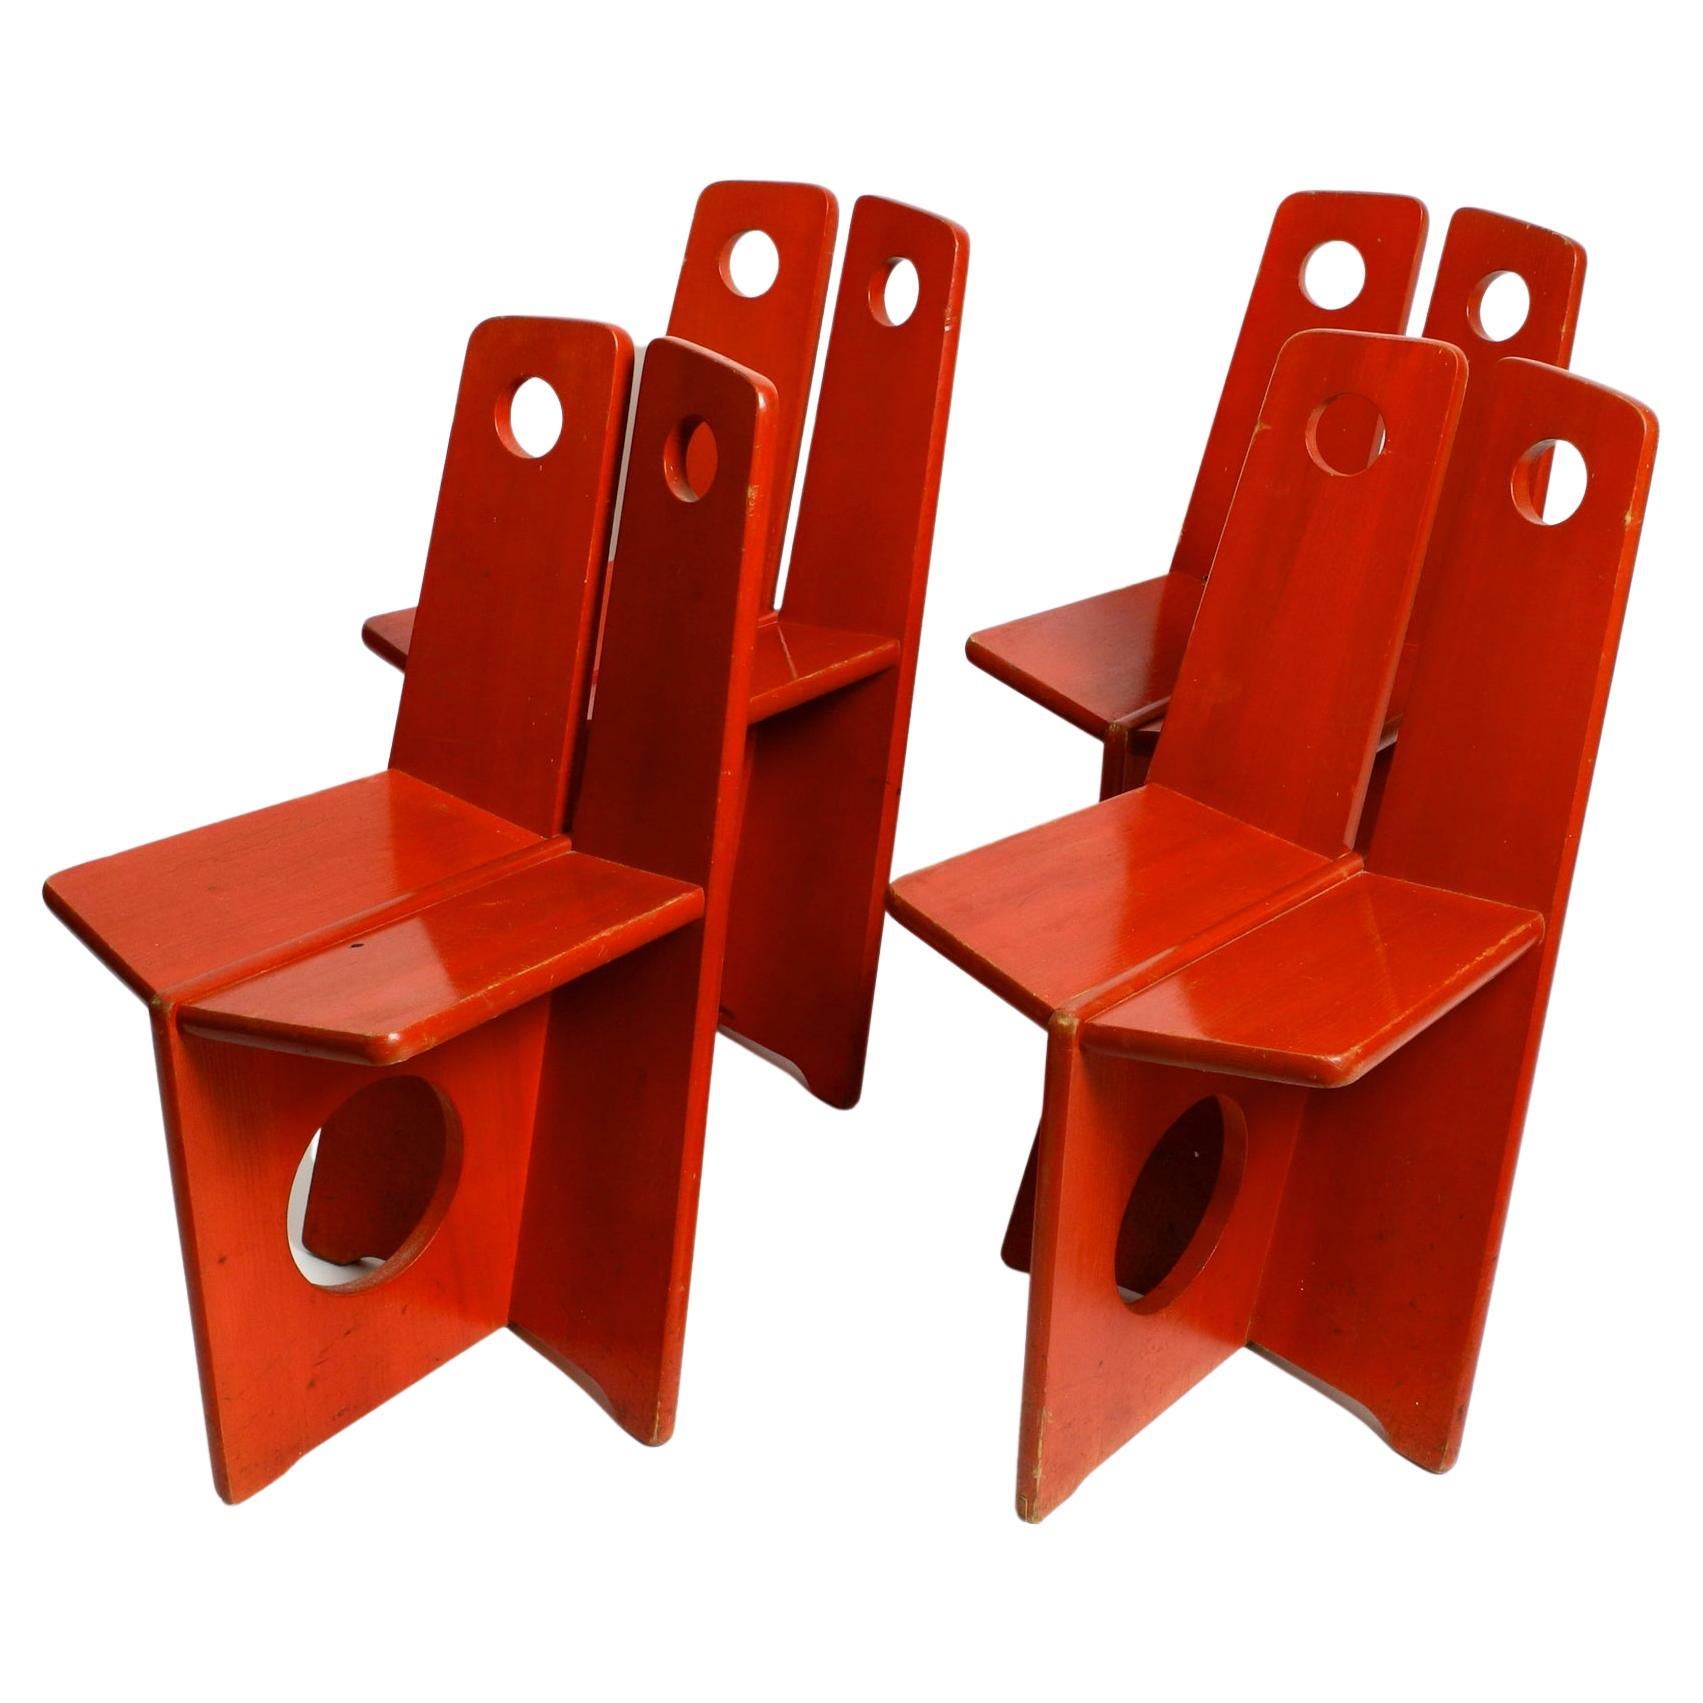 Set of 4 Original Gilbert Marklund Pine Chairs for Furusnickarn AB Sweden, 1970s